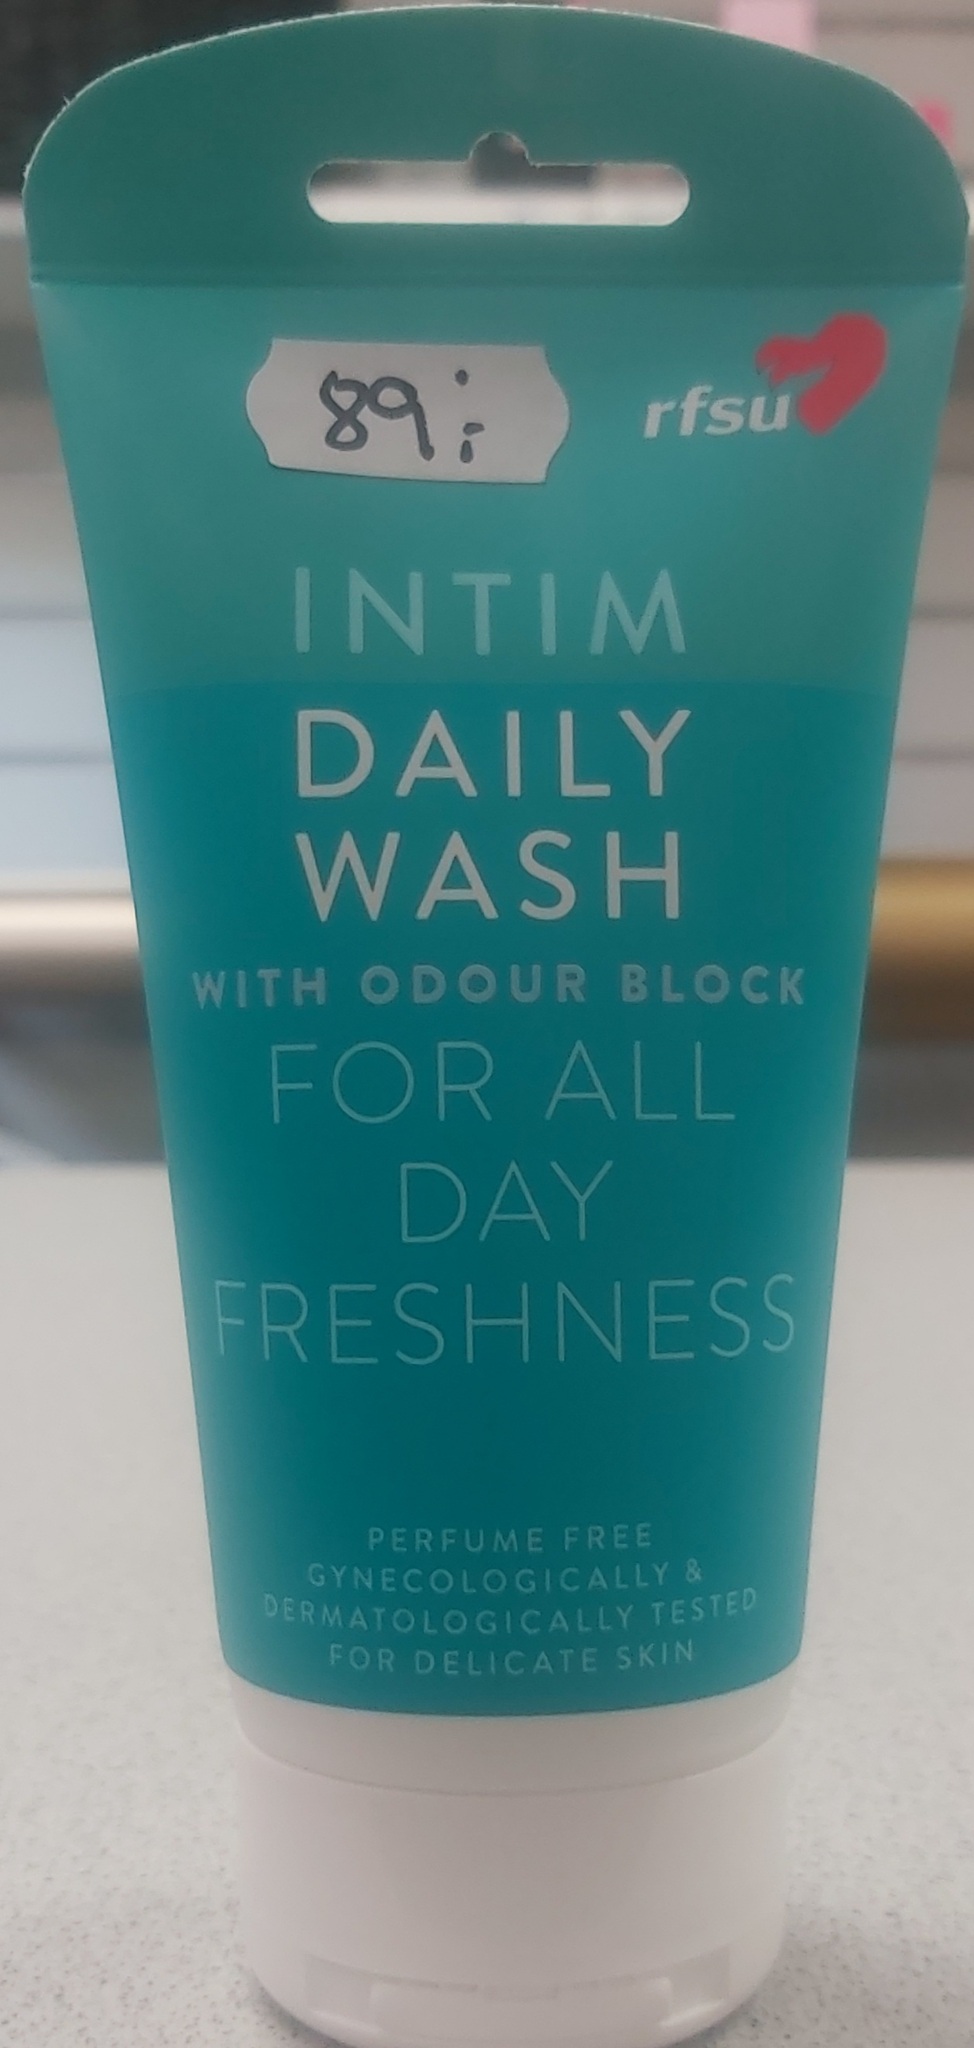 Intim Daily Wash